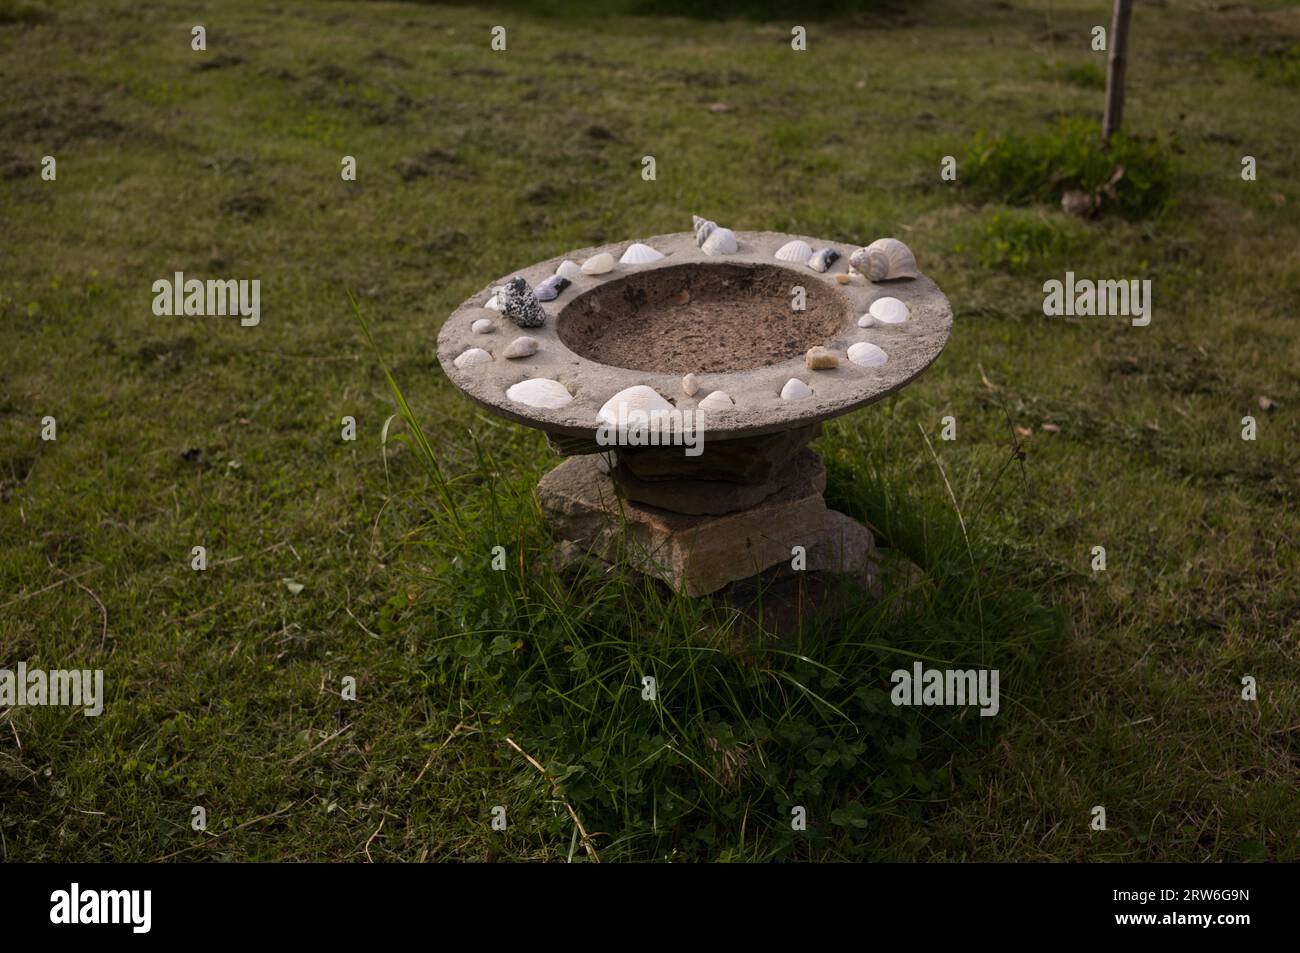 Stone bird bath on lawn Stock Photo